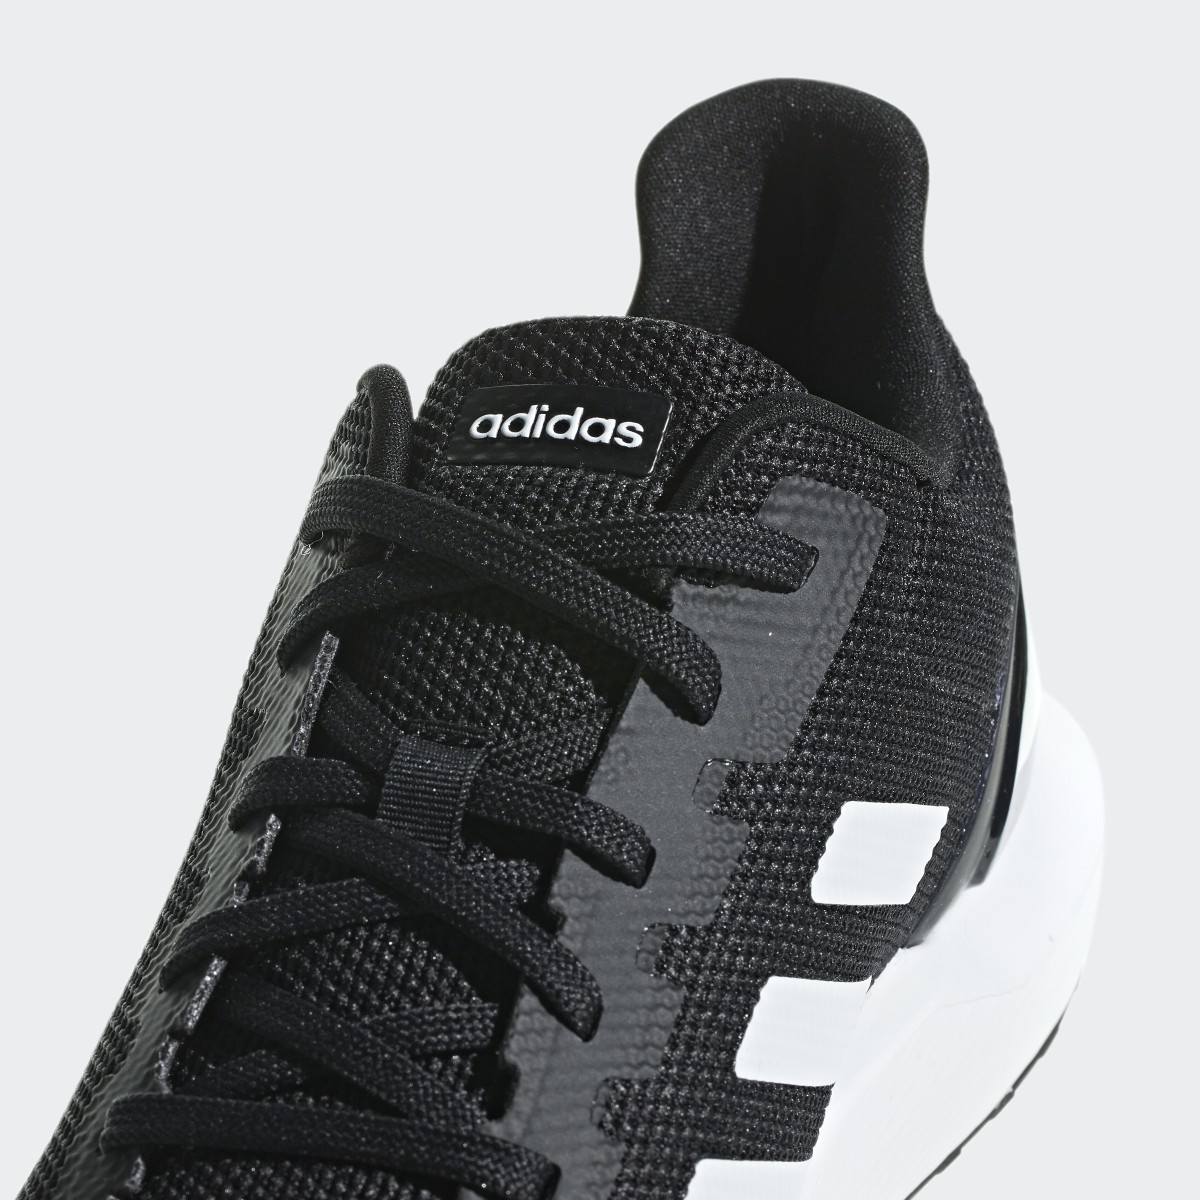 Adidas Cosmic 2 Shoes. 10